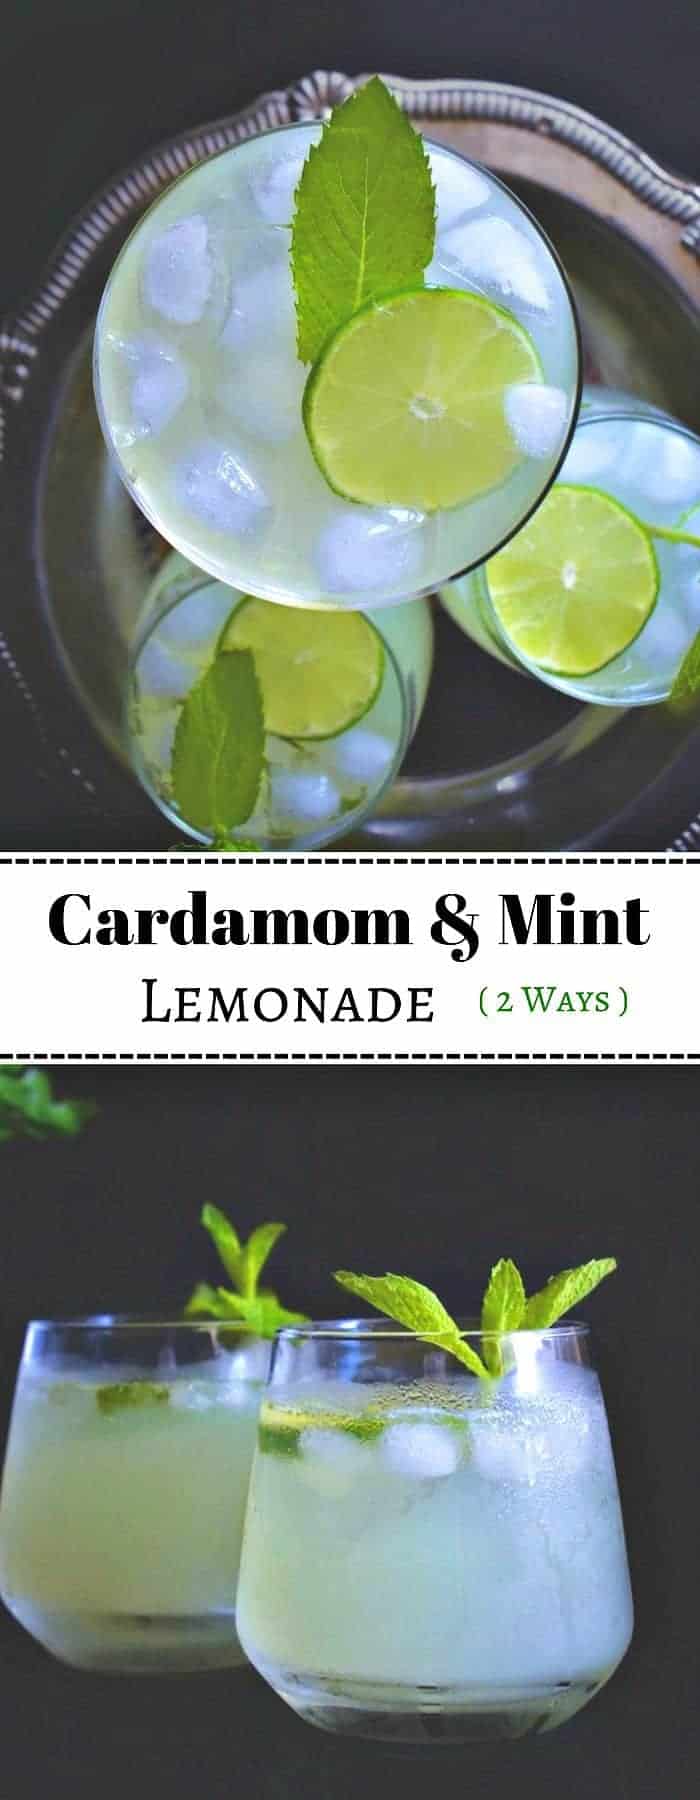 Cardamom and Mint Lemonade: #cardamom #lemonade #mint